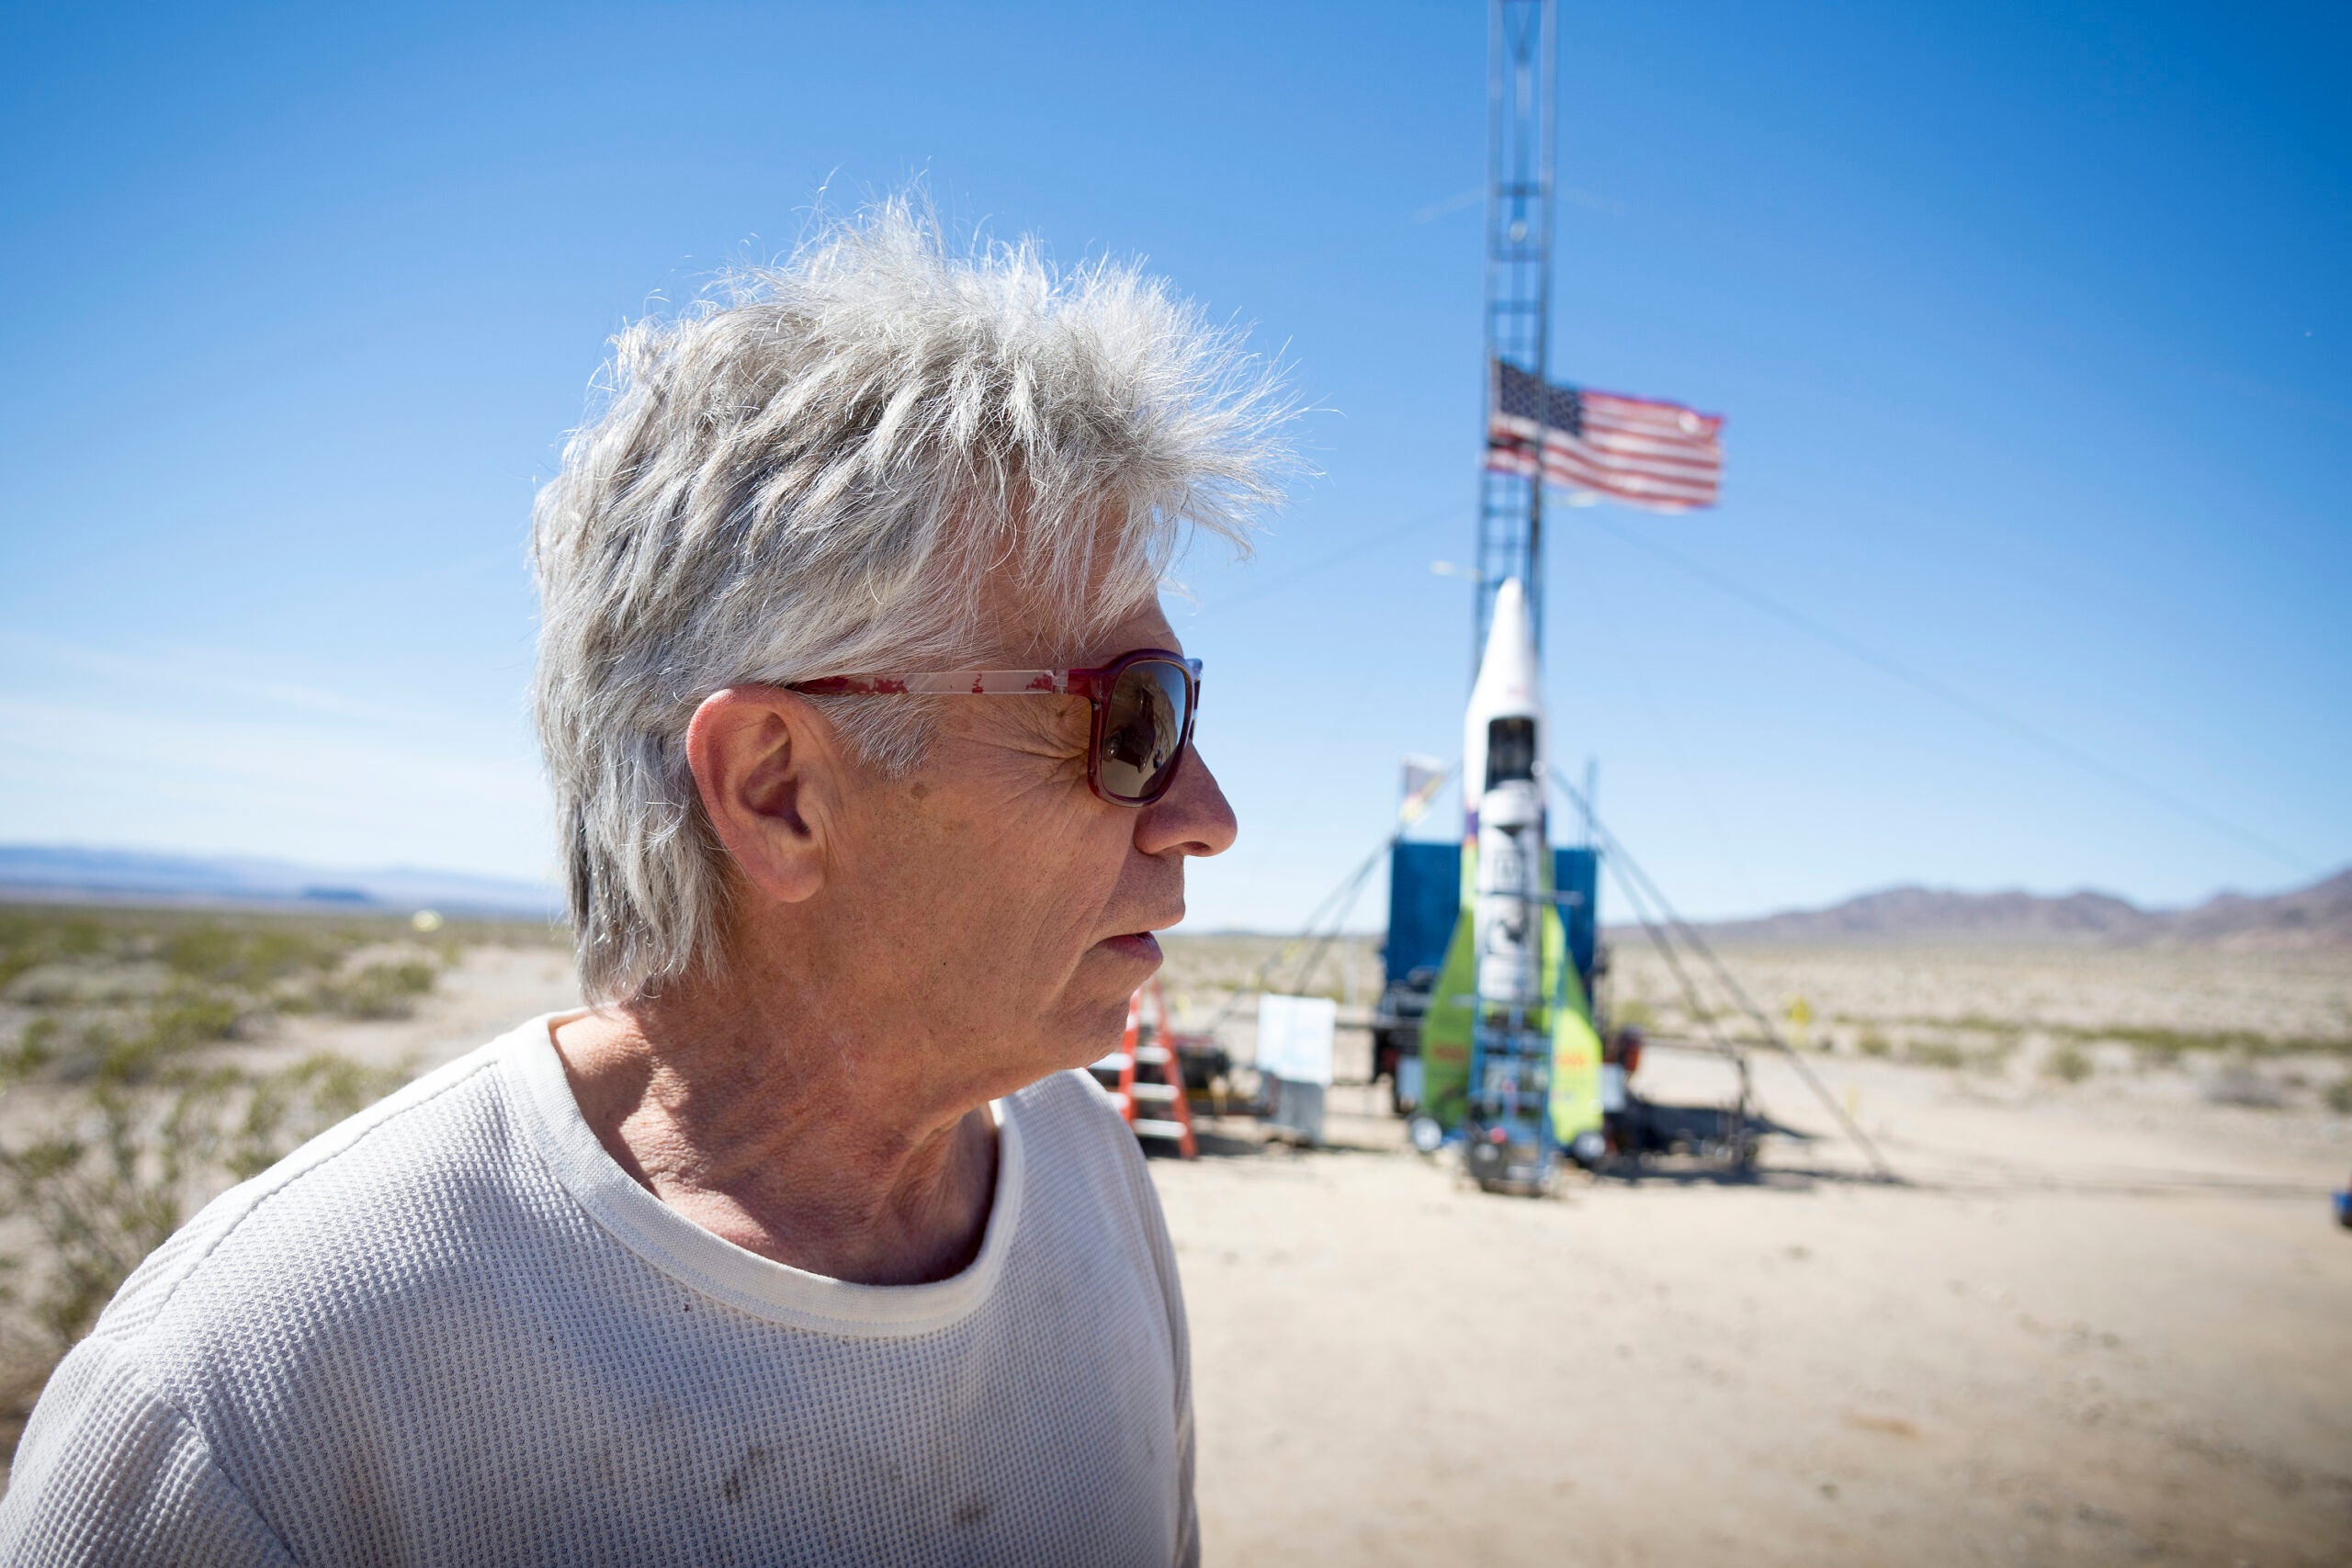 Self Taught Rocket Scientist Blasts Off Into California Sky